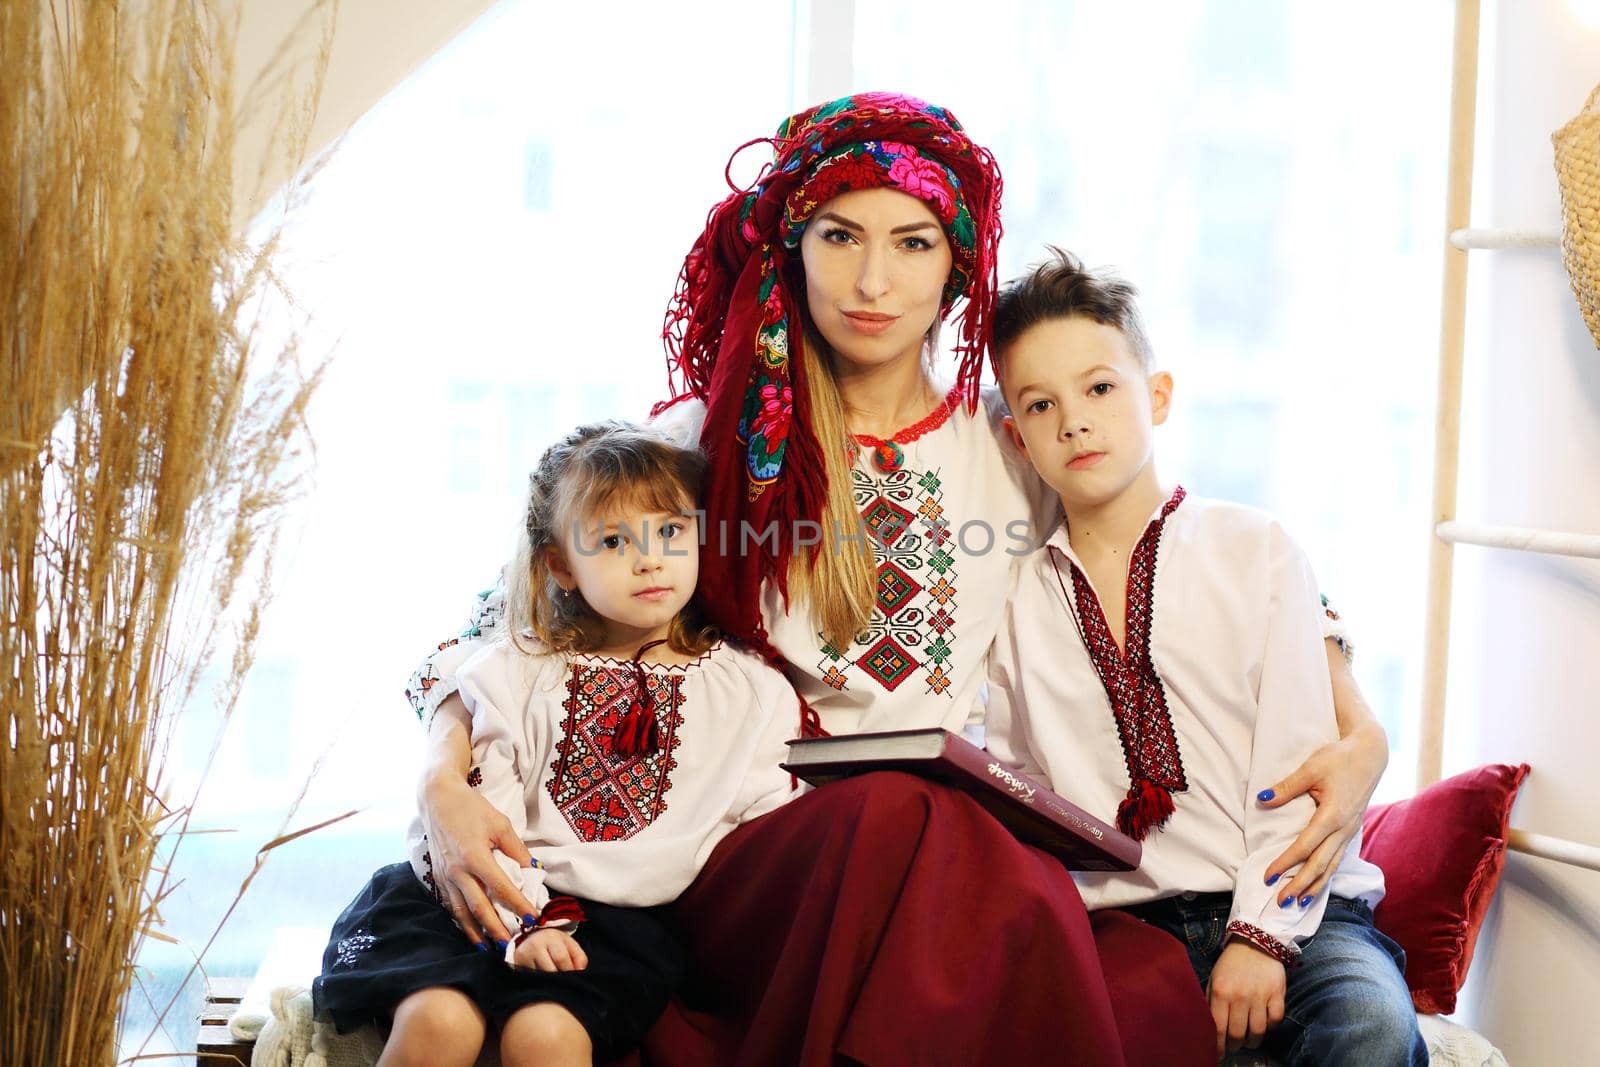 Ukraininan family wearing ethnic style embroidered shirt, modern derivative from traditional Ukrainian vyshyvanka.